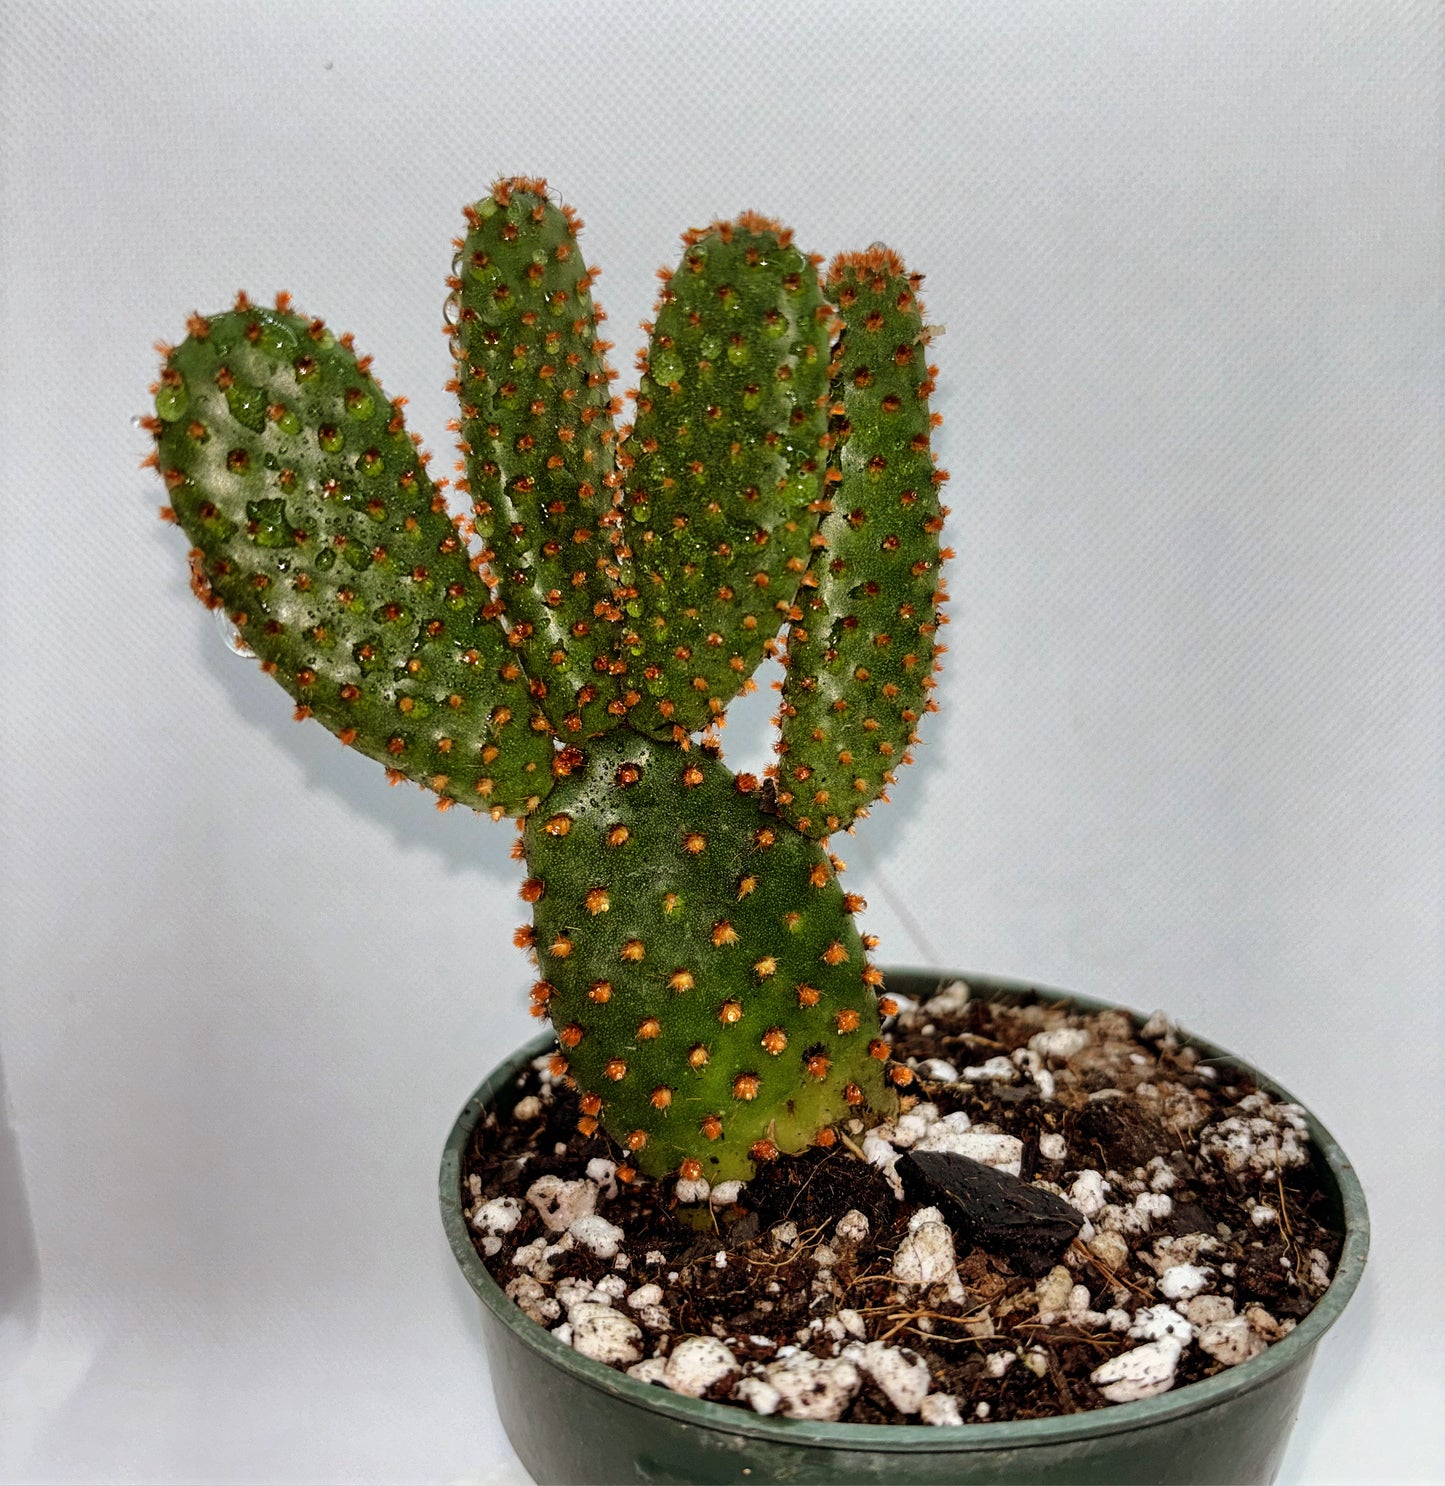 Cinnamon Bunny Ears Cactus, Opuntia Microdasys S. Rufida, Well Rooted